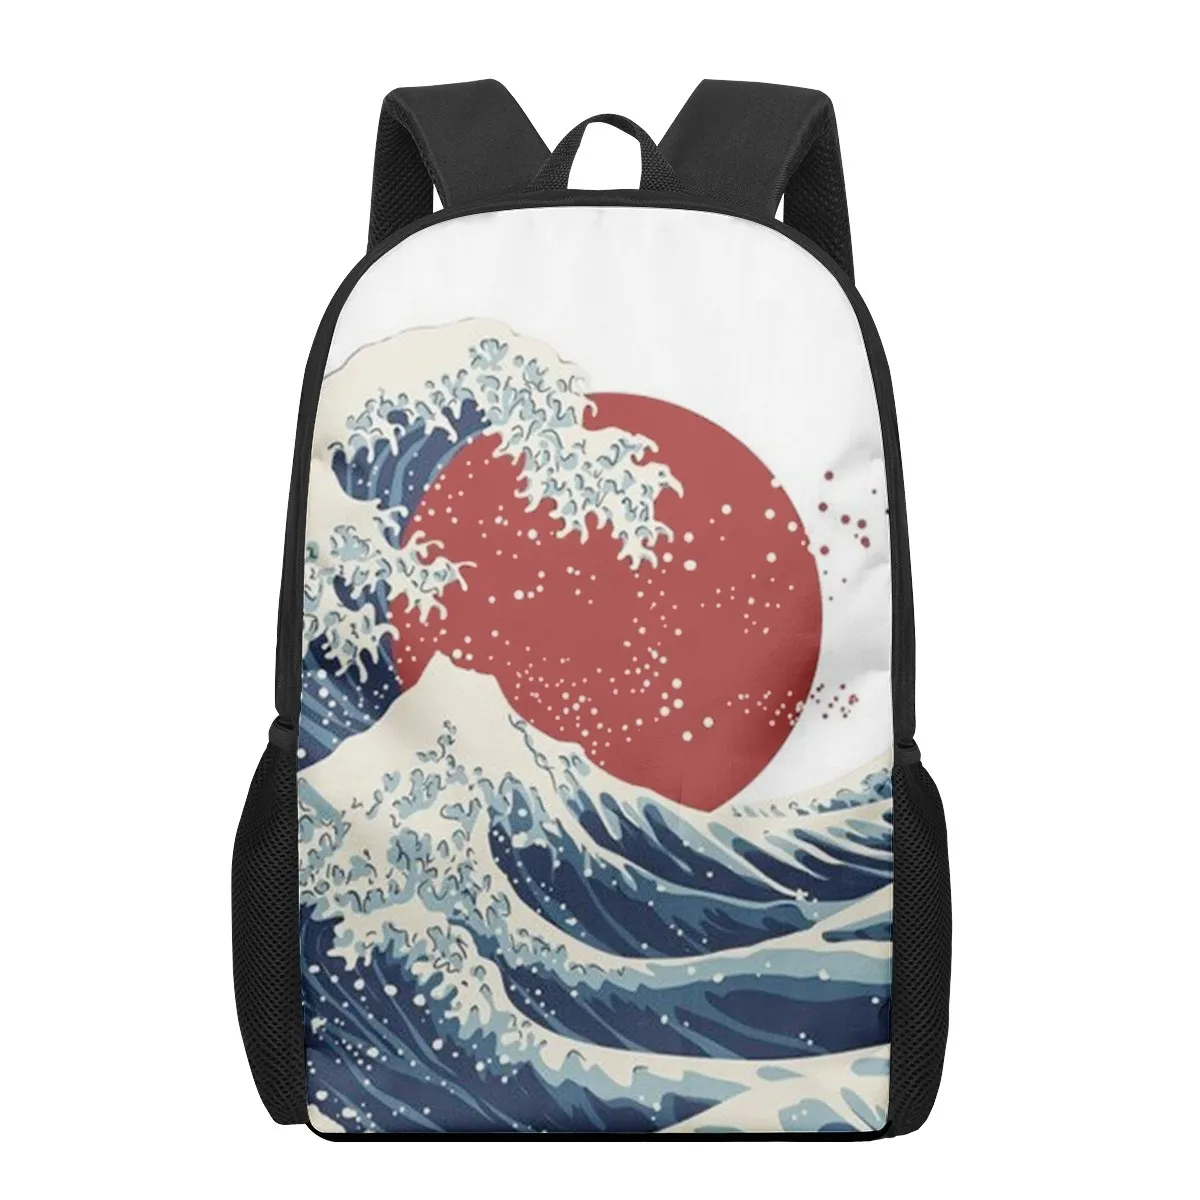 Japan Aesthetics Art Waves Print 16-inch teen school bag boys girls kids school backpack student school bag school bag фото